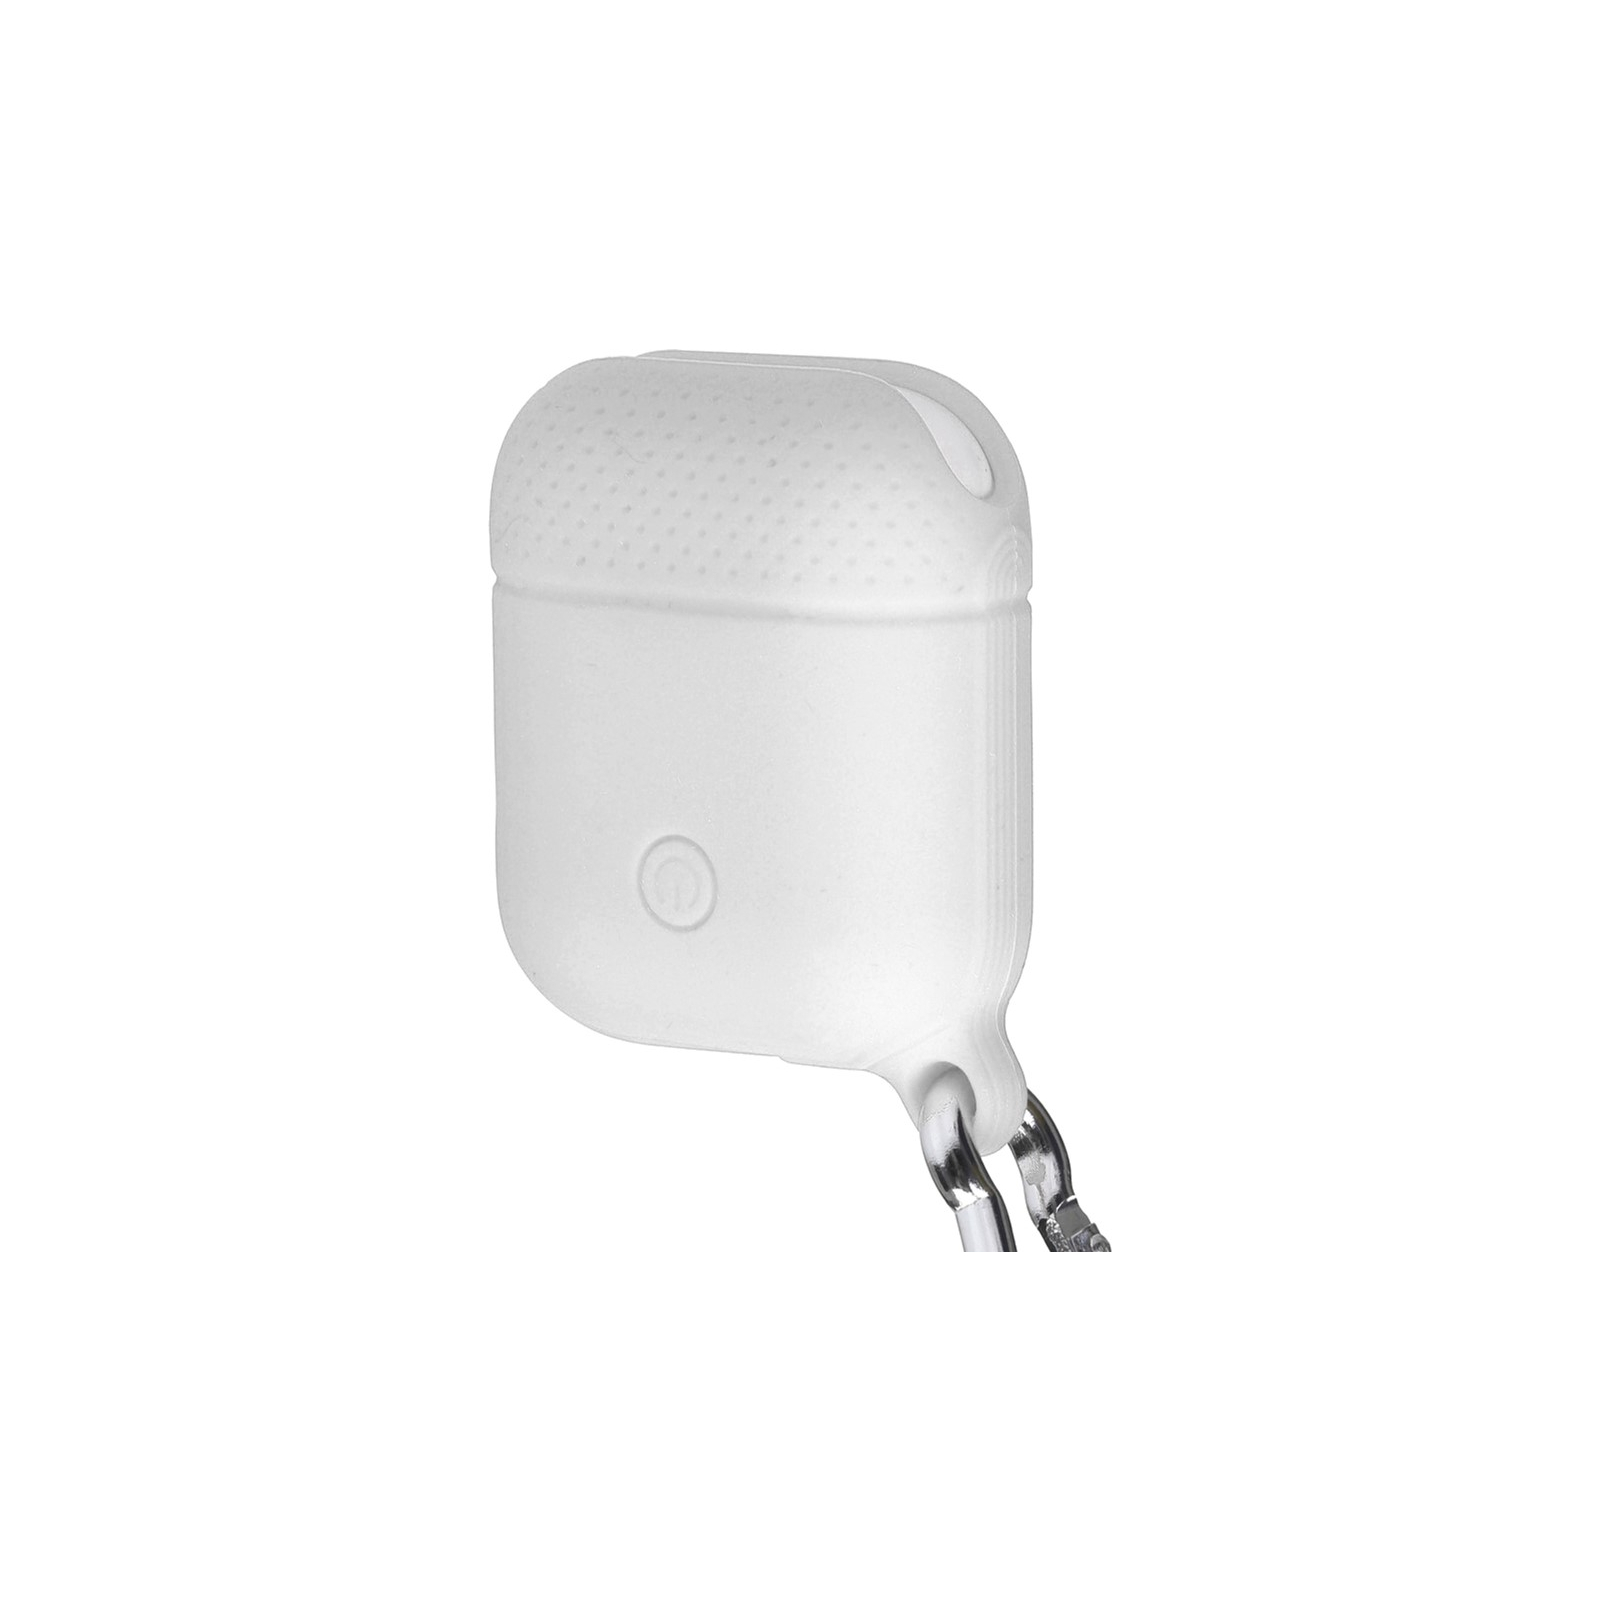 Чохол для навушників Huxing Series i-Smile для Apple AirPods IPH1458 Gray (703330)